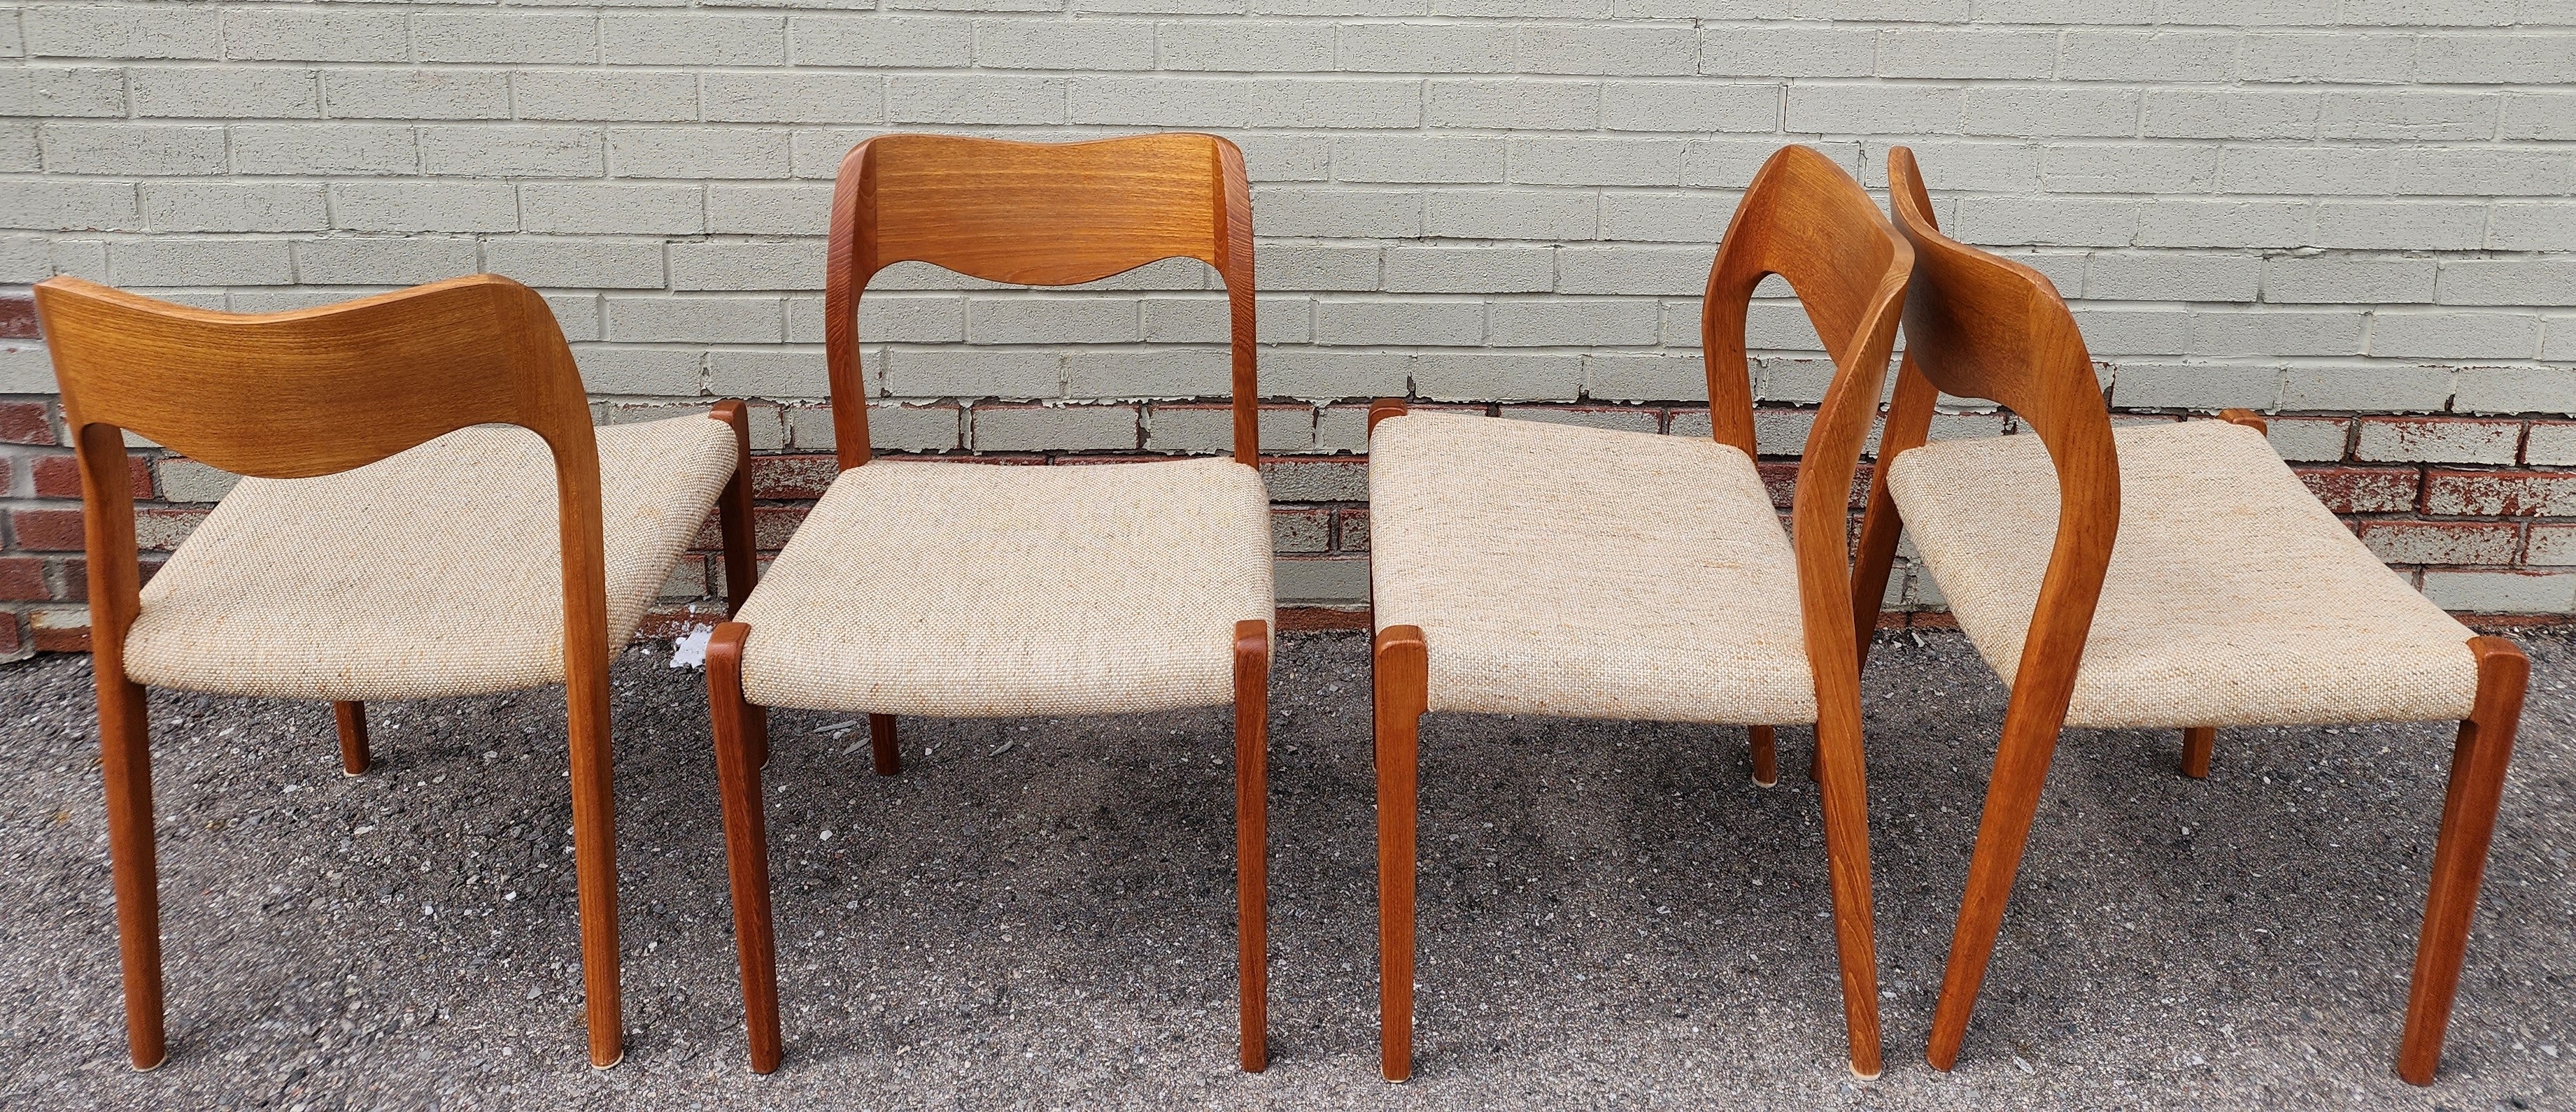 6 RESTORED Danish Mid Century Modern Teak Chairs by Niels O. Møller, M